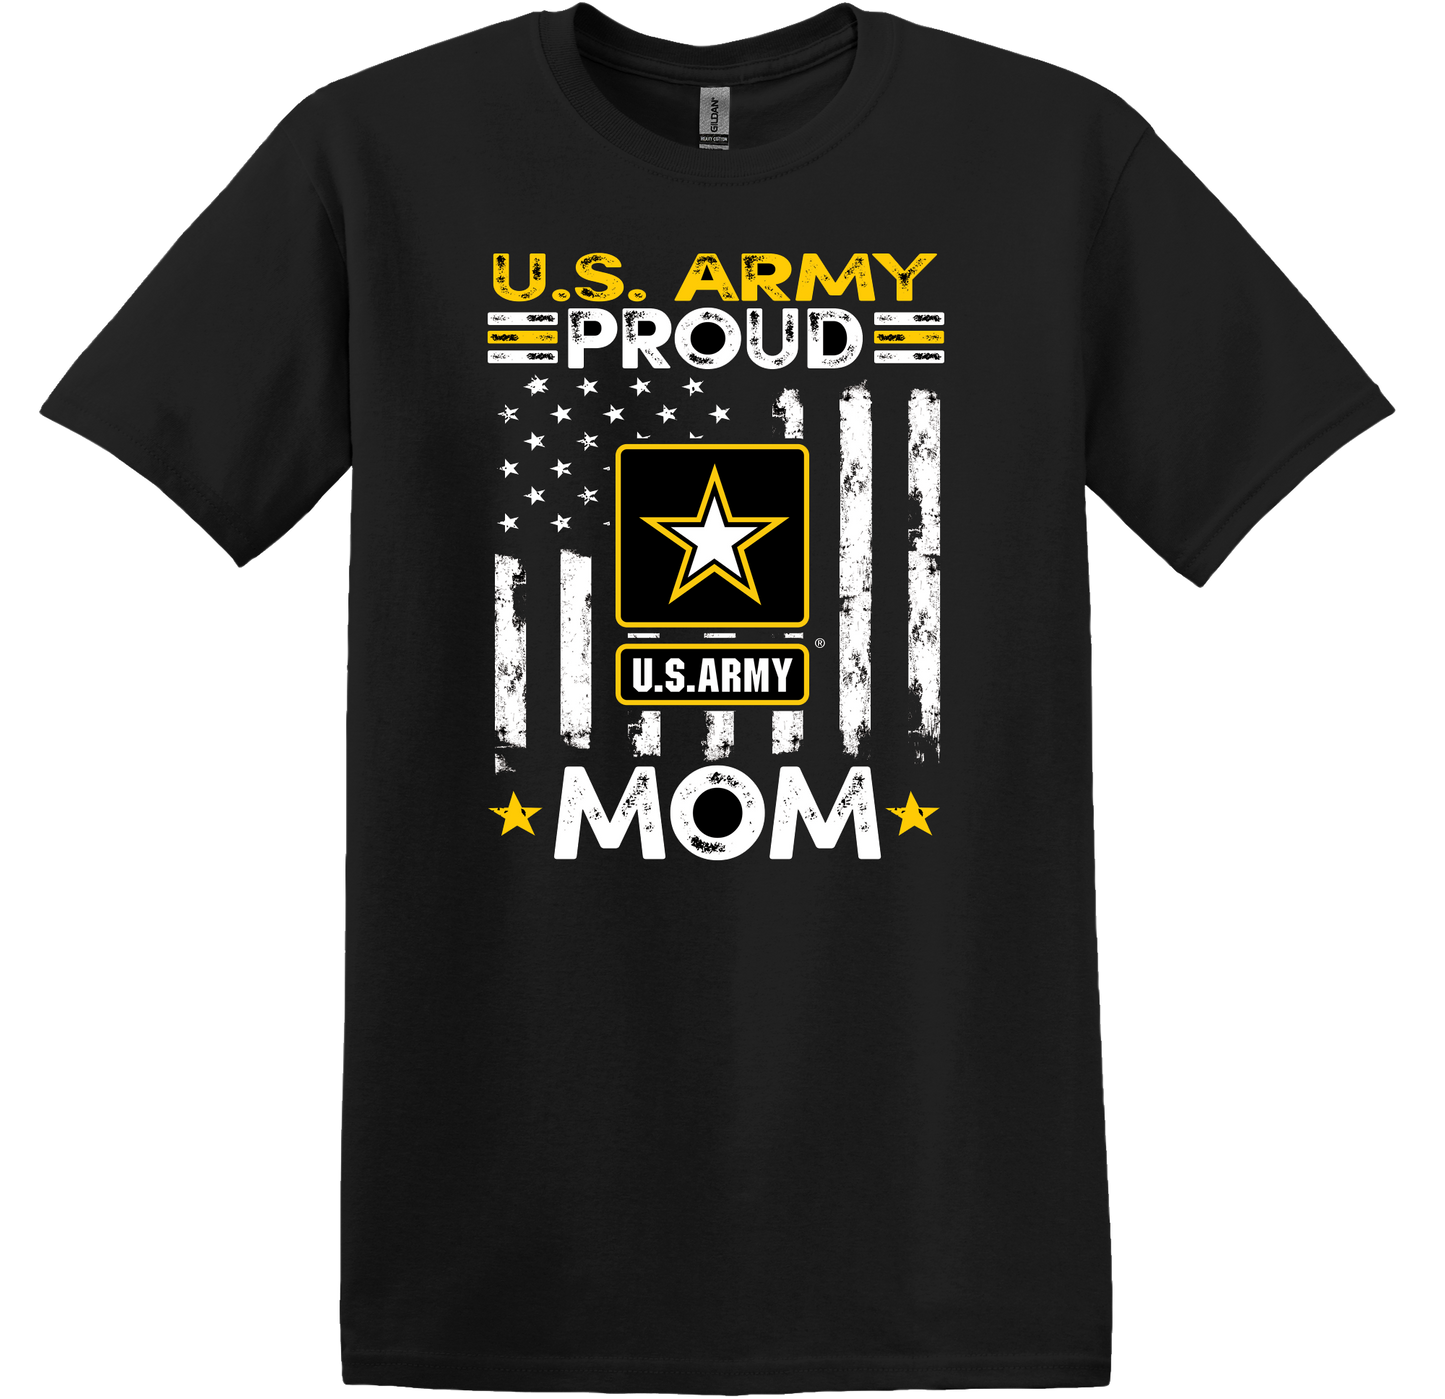 U.S. Army Proud Mom with U.S. Army Star on Unisex Short Sleeve T-Shirt